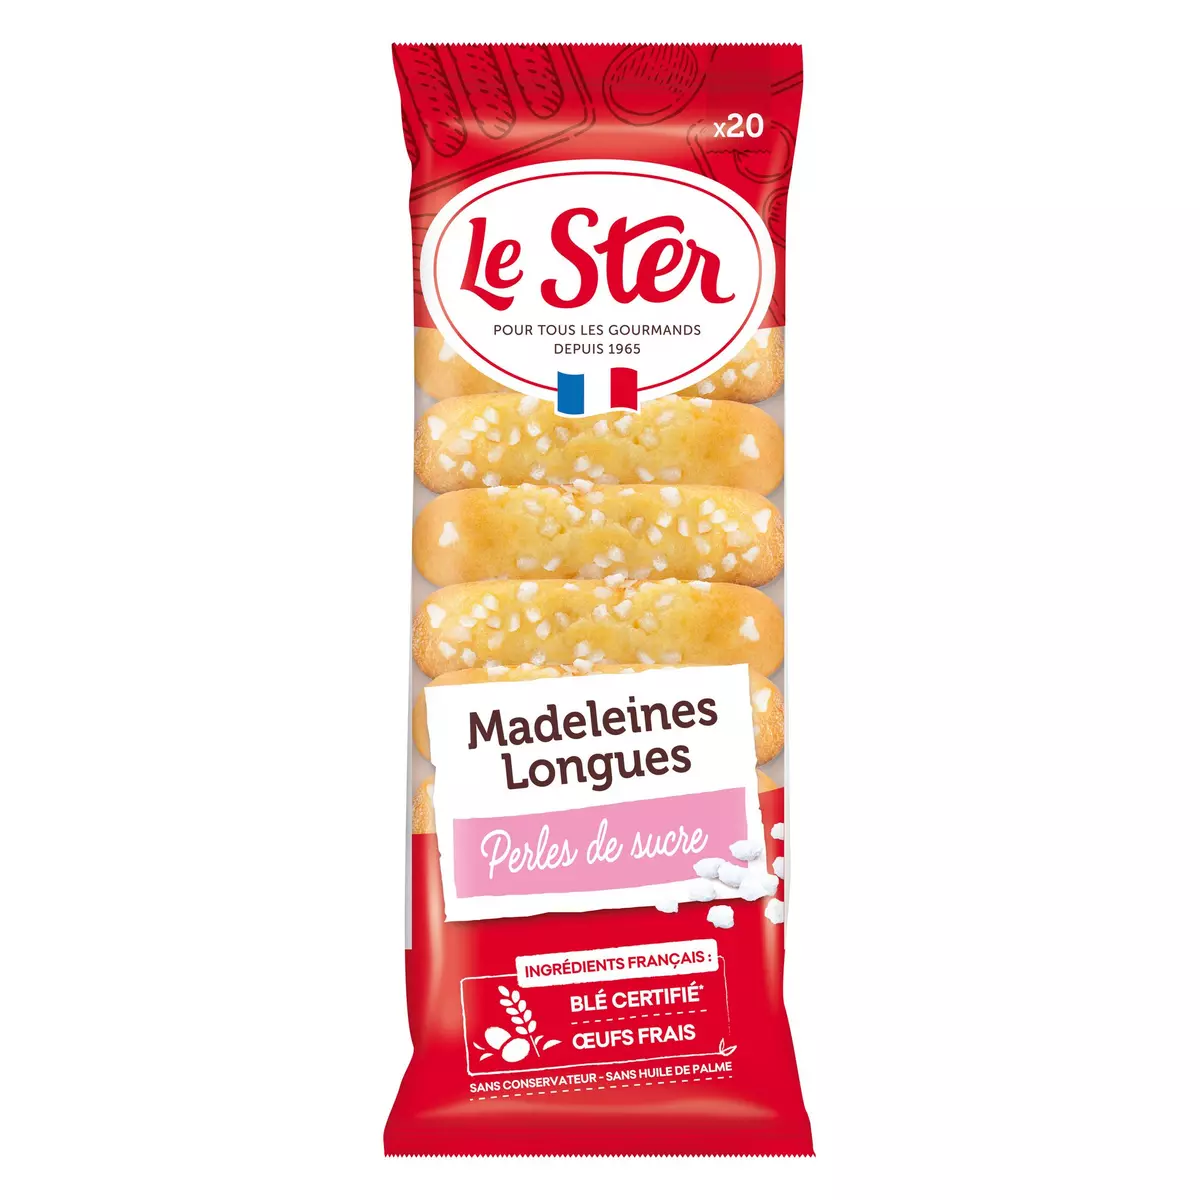 LE STER Madeleines longues aux perles de sucre 20 madeleines 250g